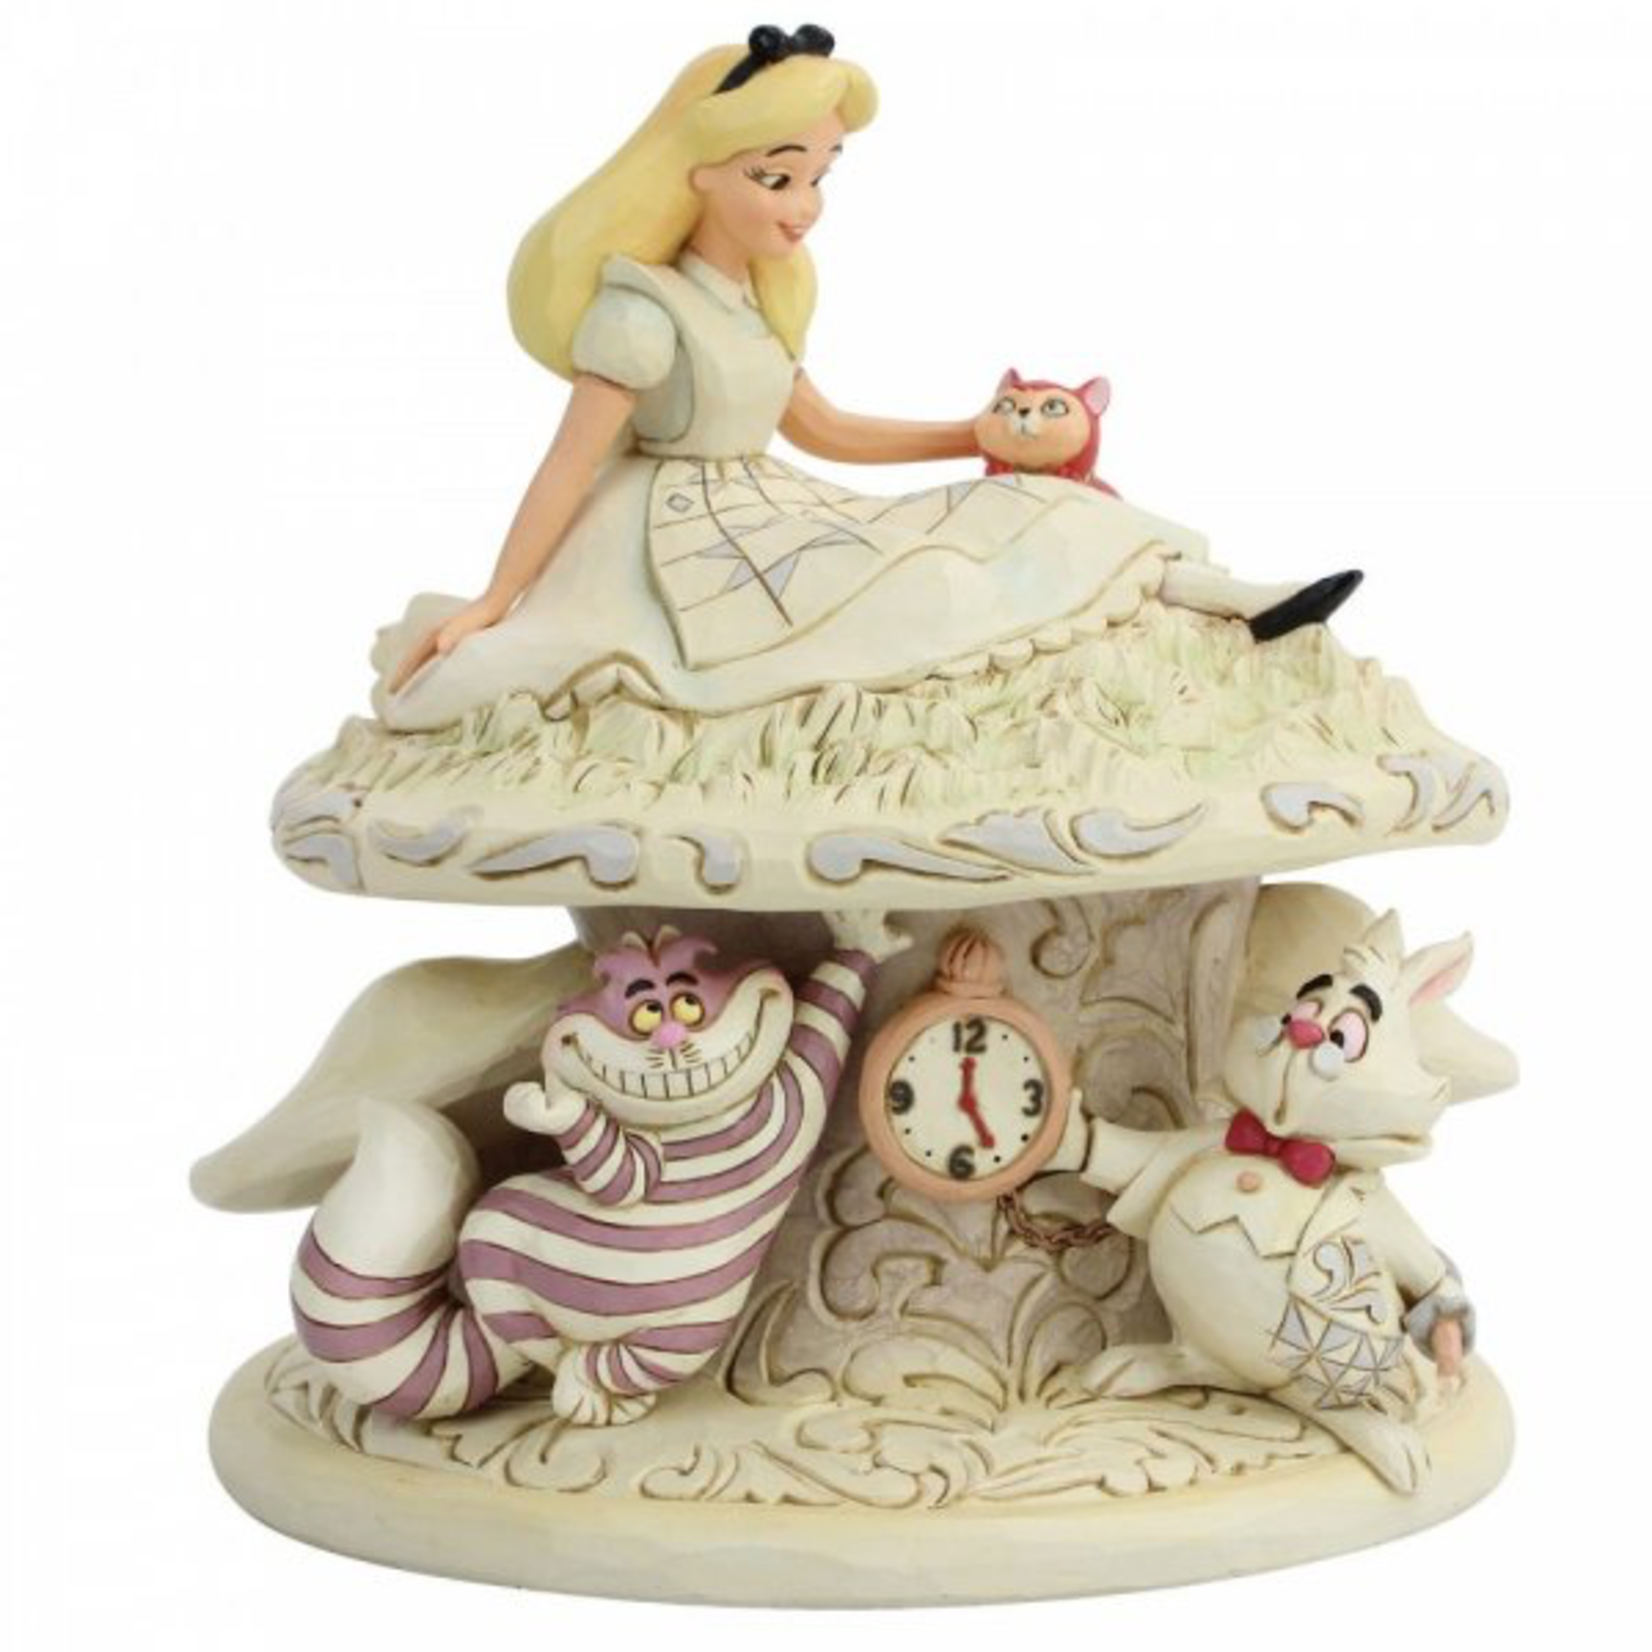 Disney Traditions Disney - Alice in Wonderland Whimsy and Wonder Figurine - White Woodland